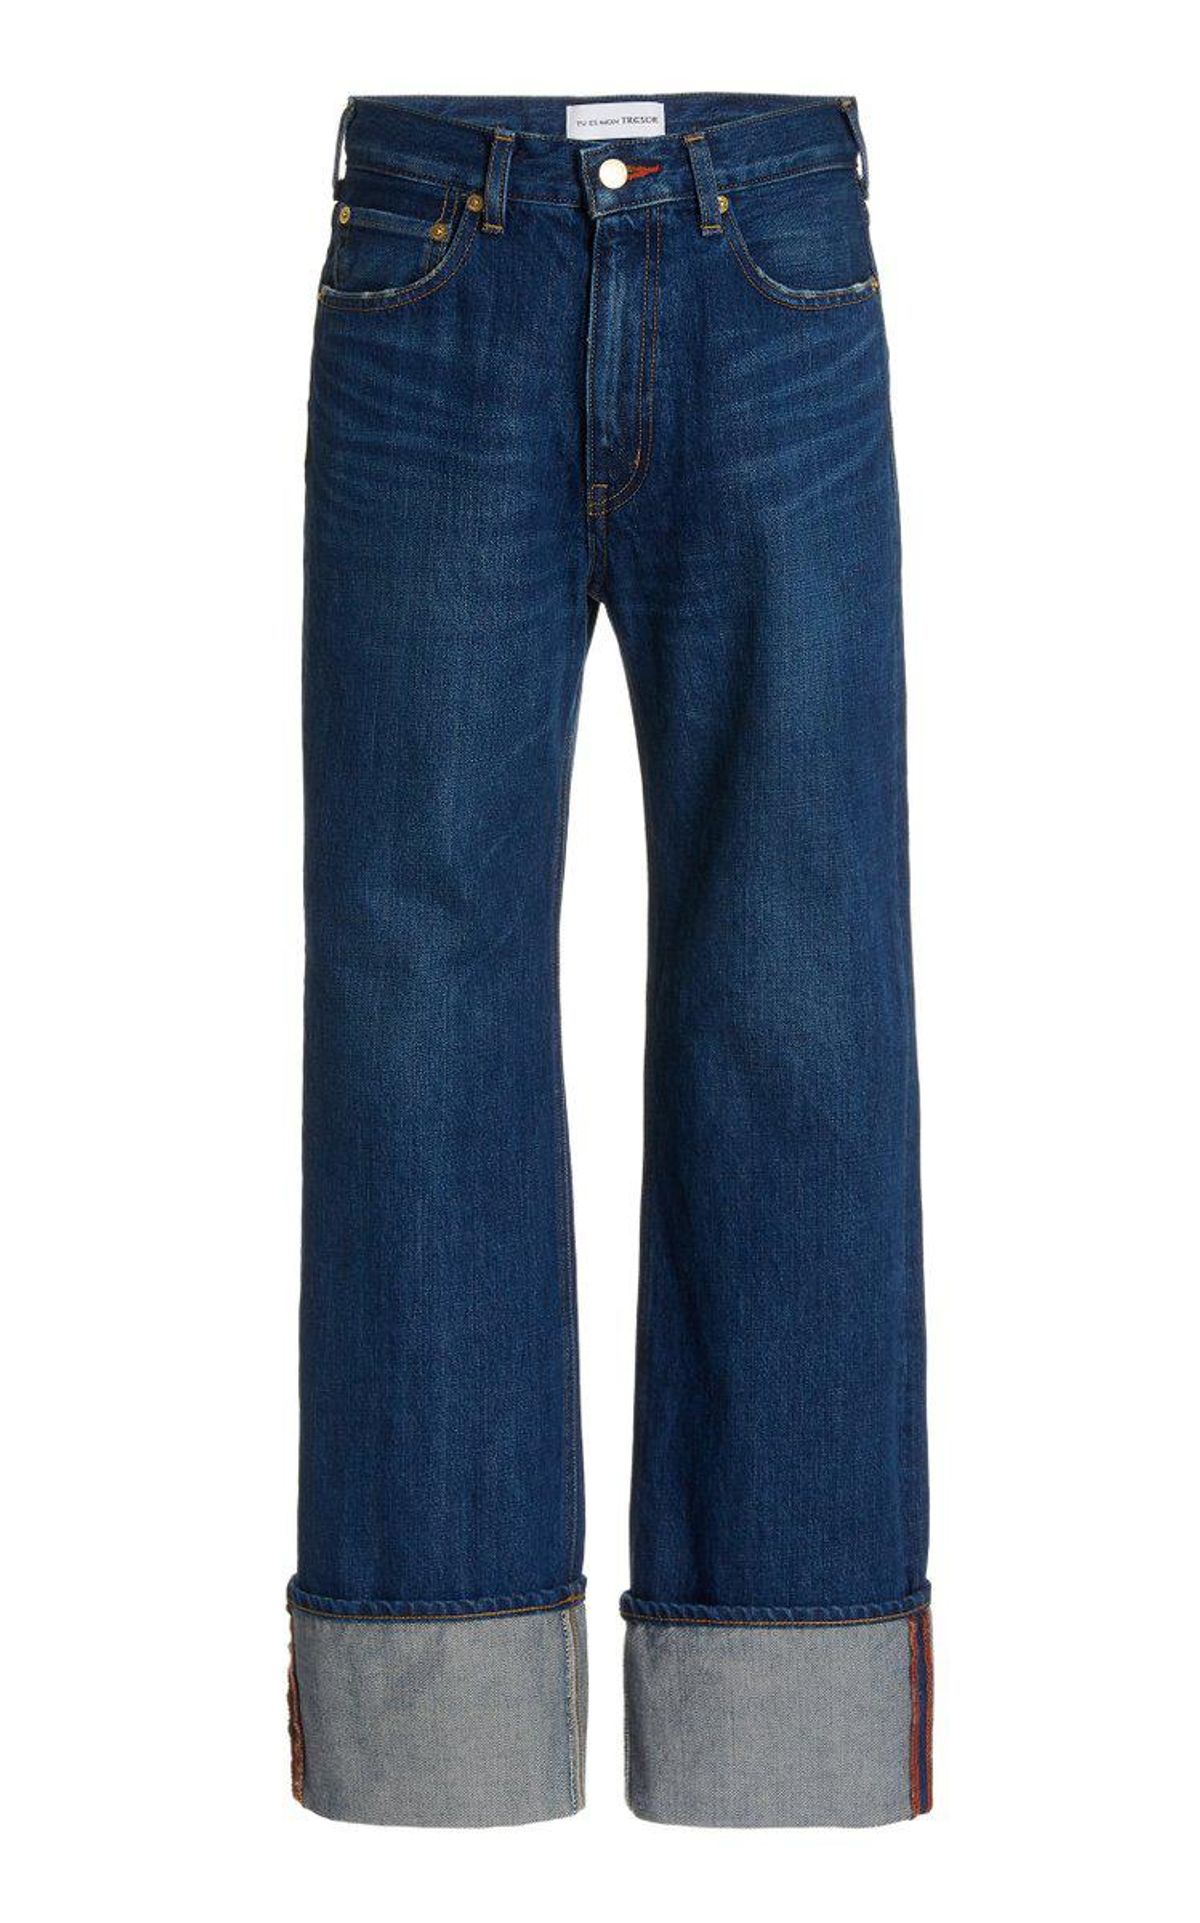 Carnelian Rigid High-rise Straight-leg Cuffed Jeans